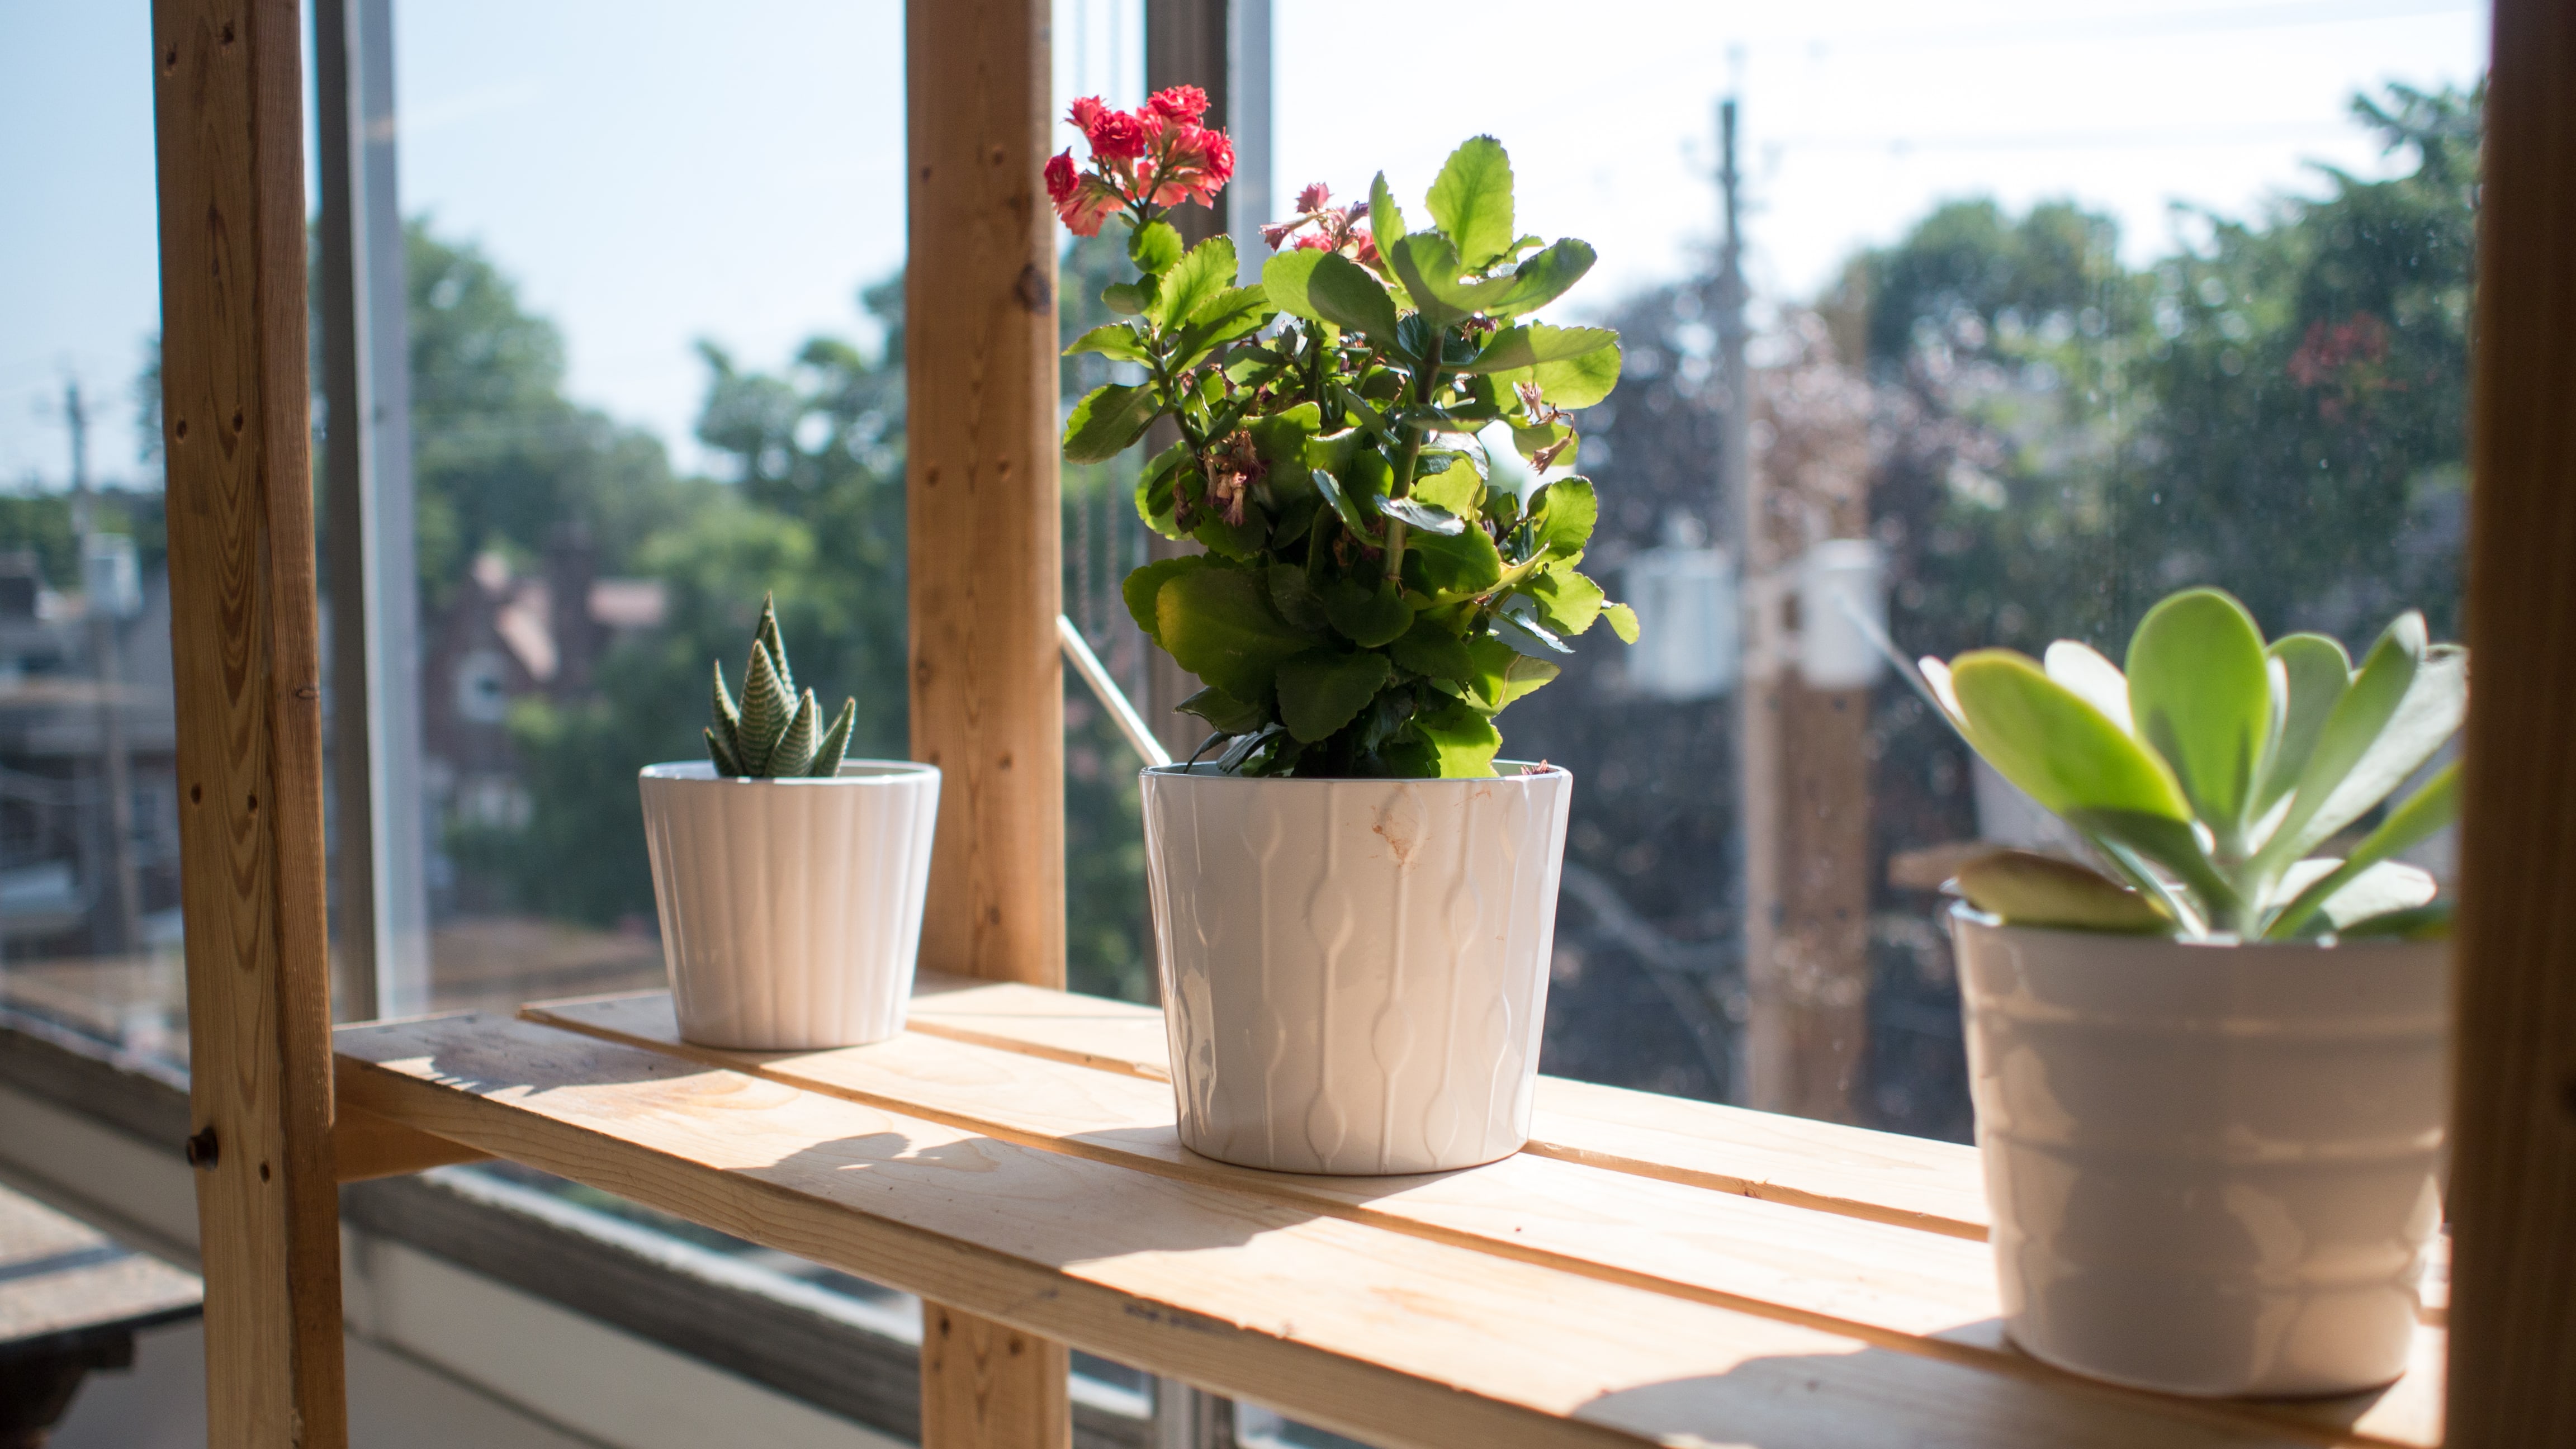 A row of three plants on a shelf near a sunny window